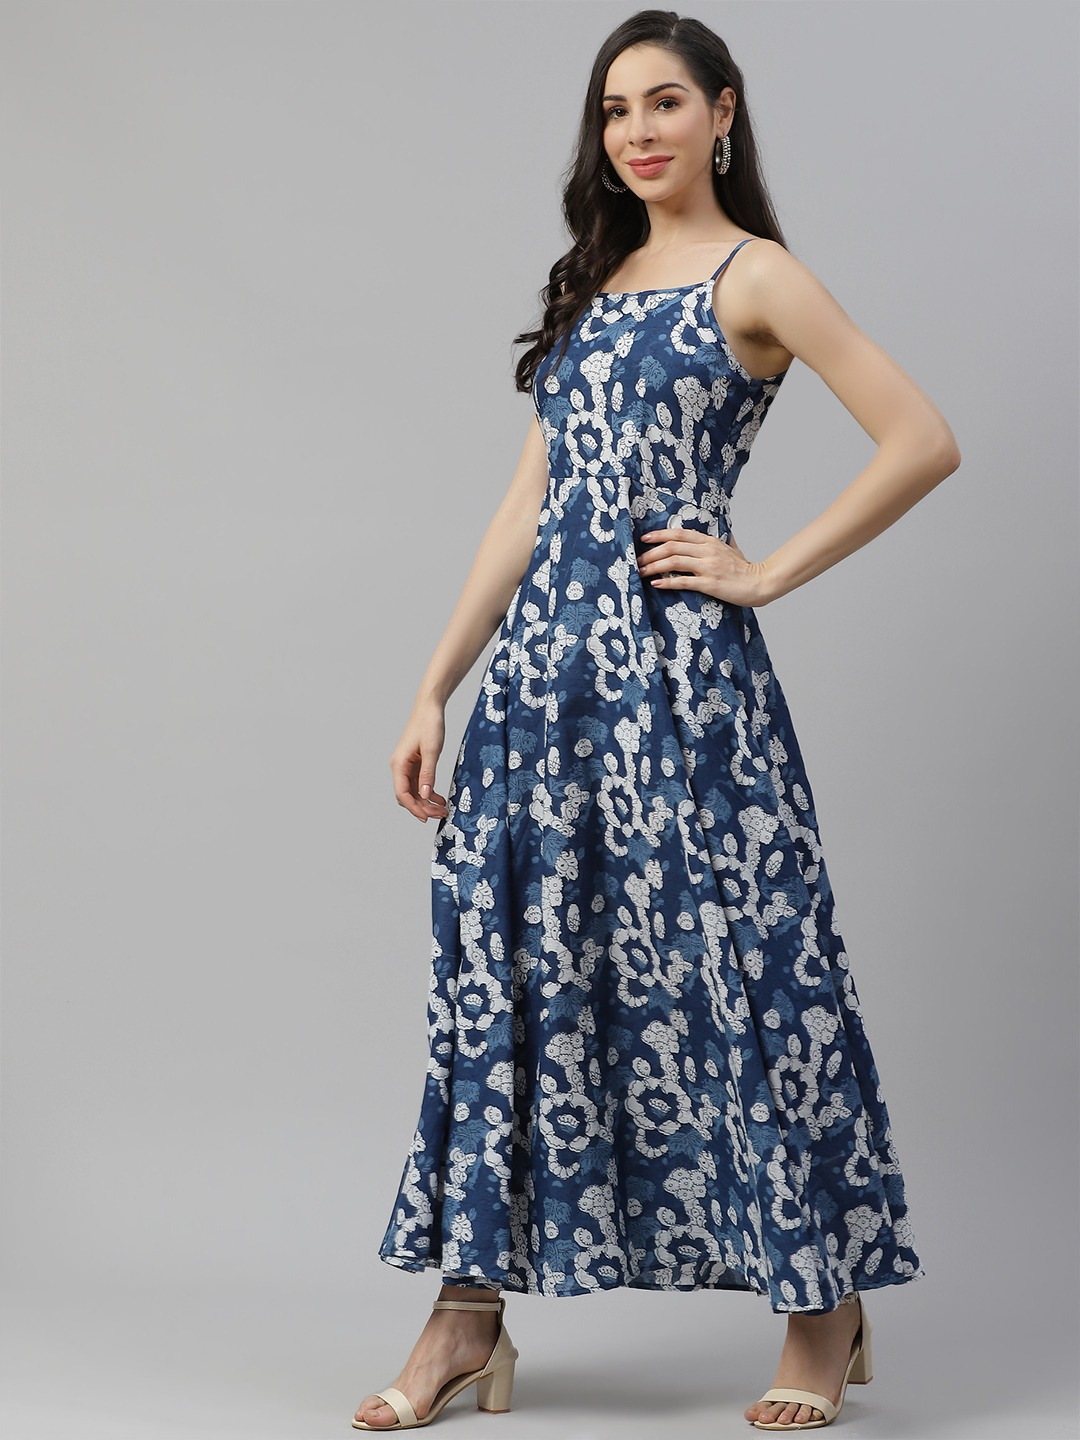 Women's Indigo Print Cotton Long Dress - Final Clearance Sale